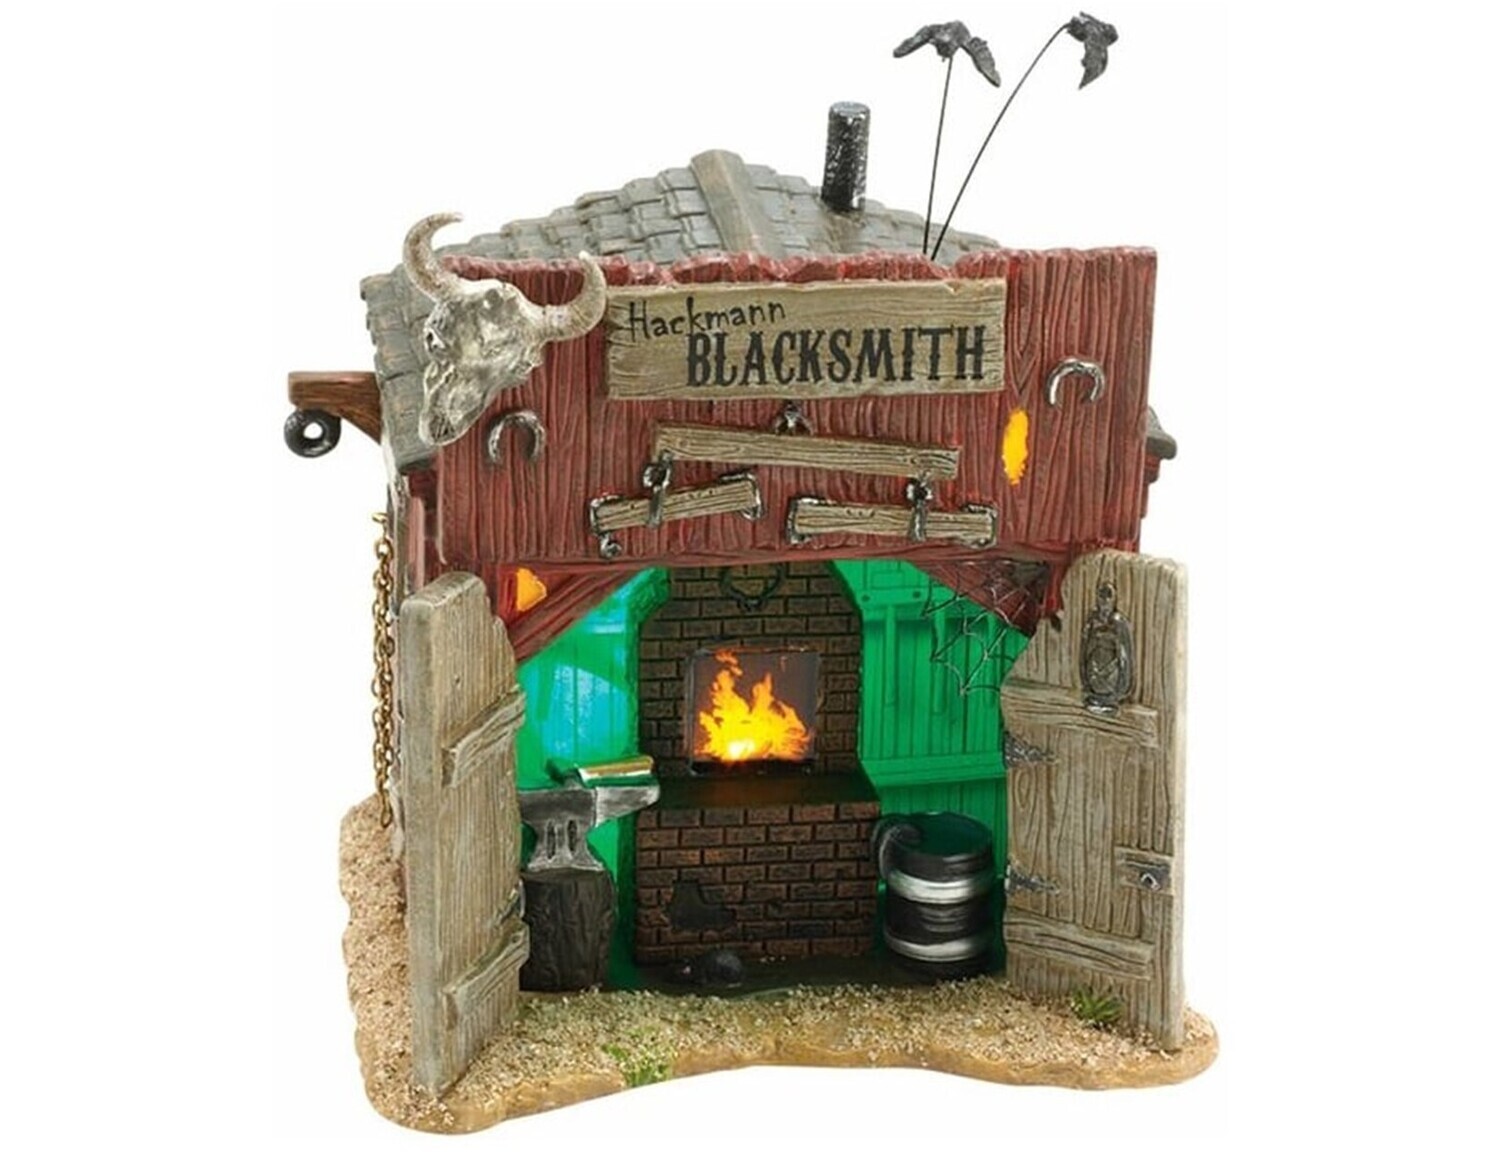 Department 56 Ghost Town Series "Hackman's Blacksmith Shop" (4036593)